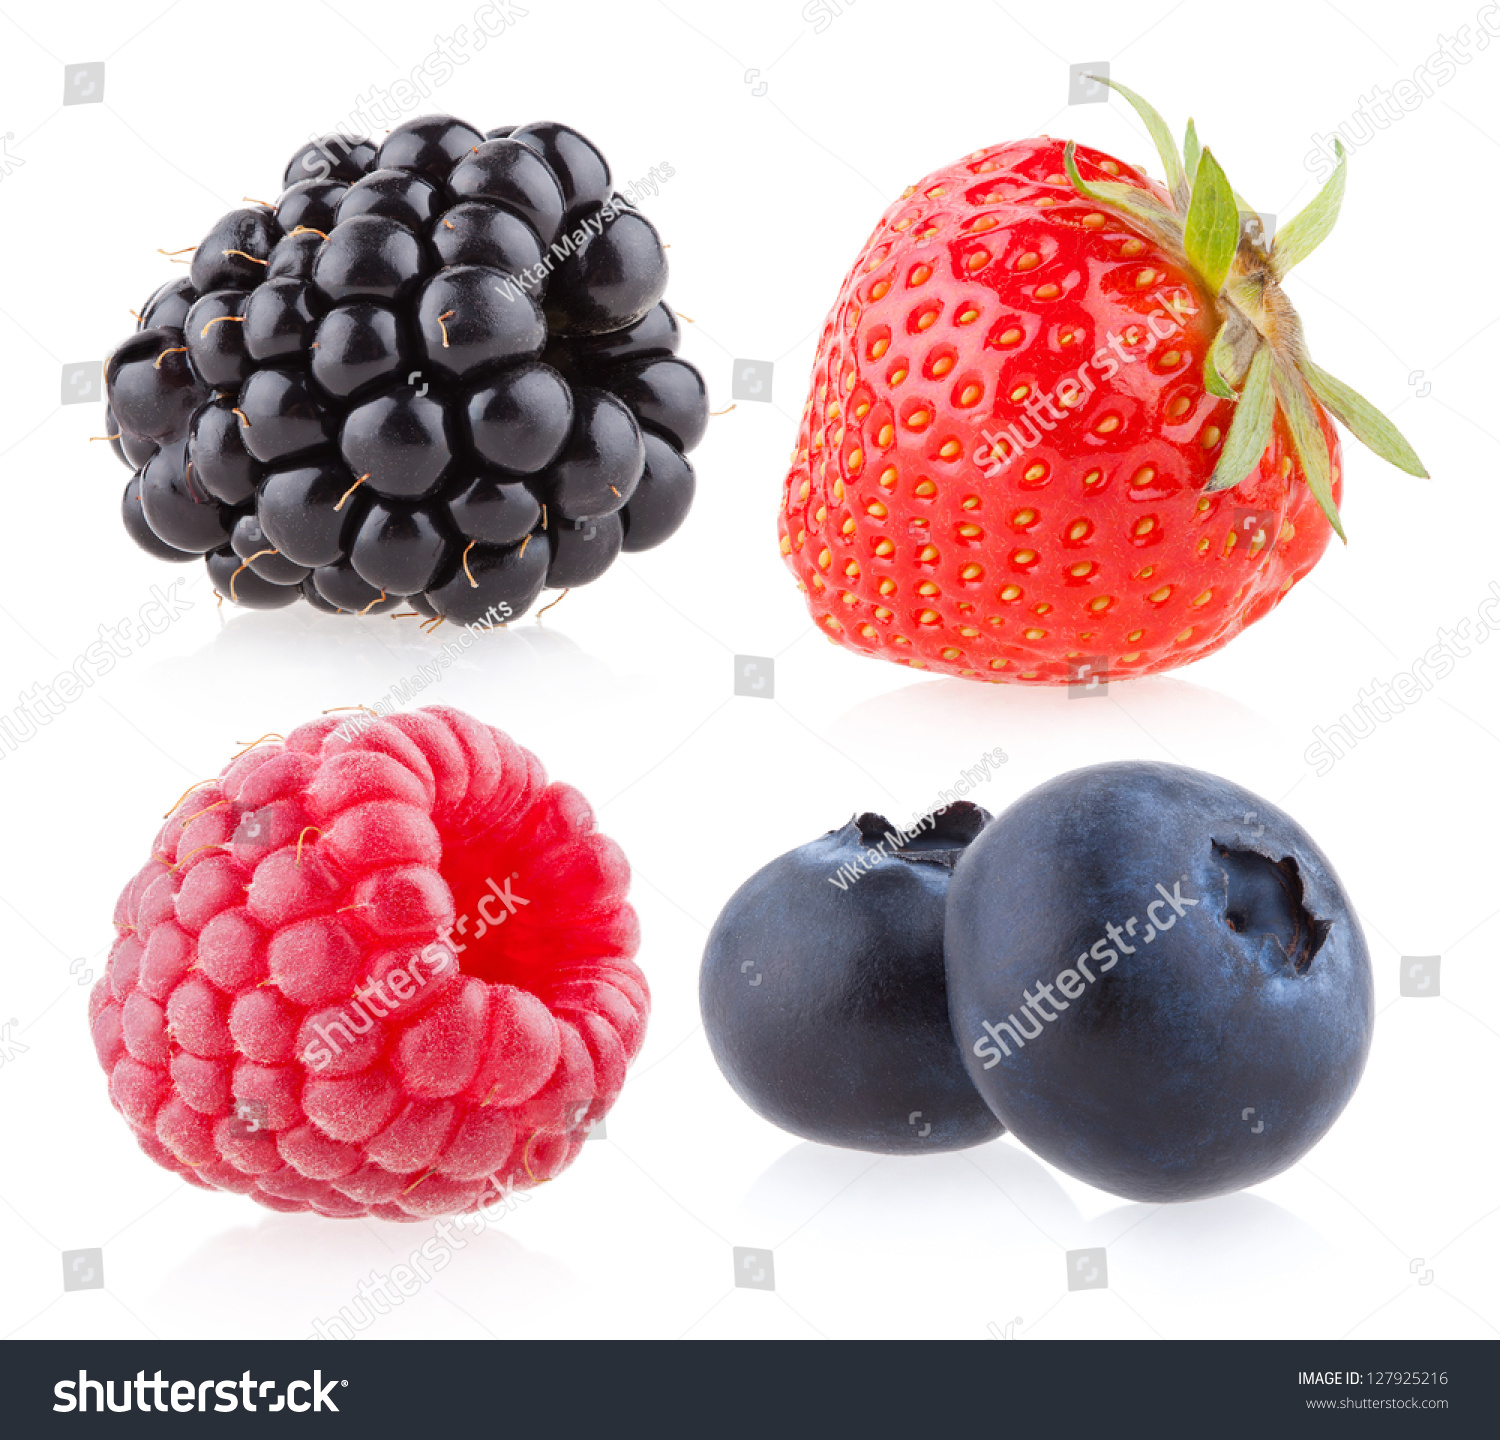 raspberry, strawberry, blueberry and blackberry #127925216